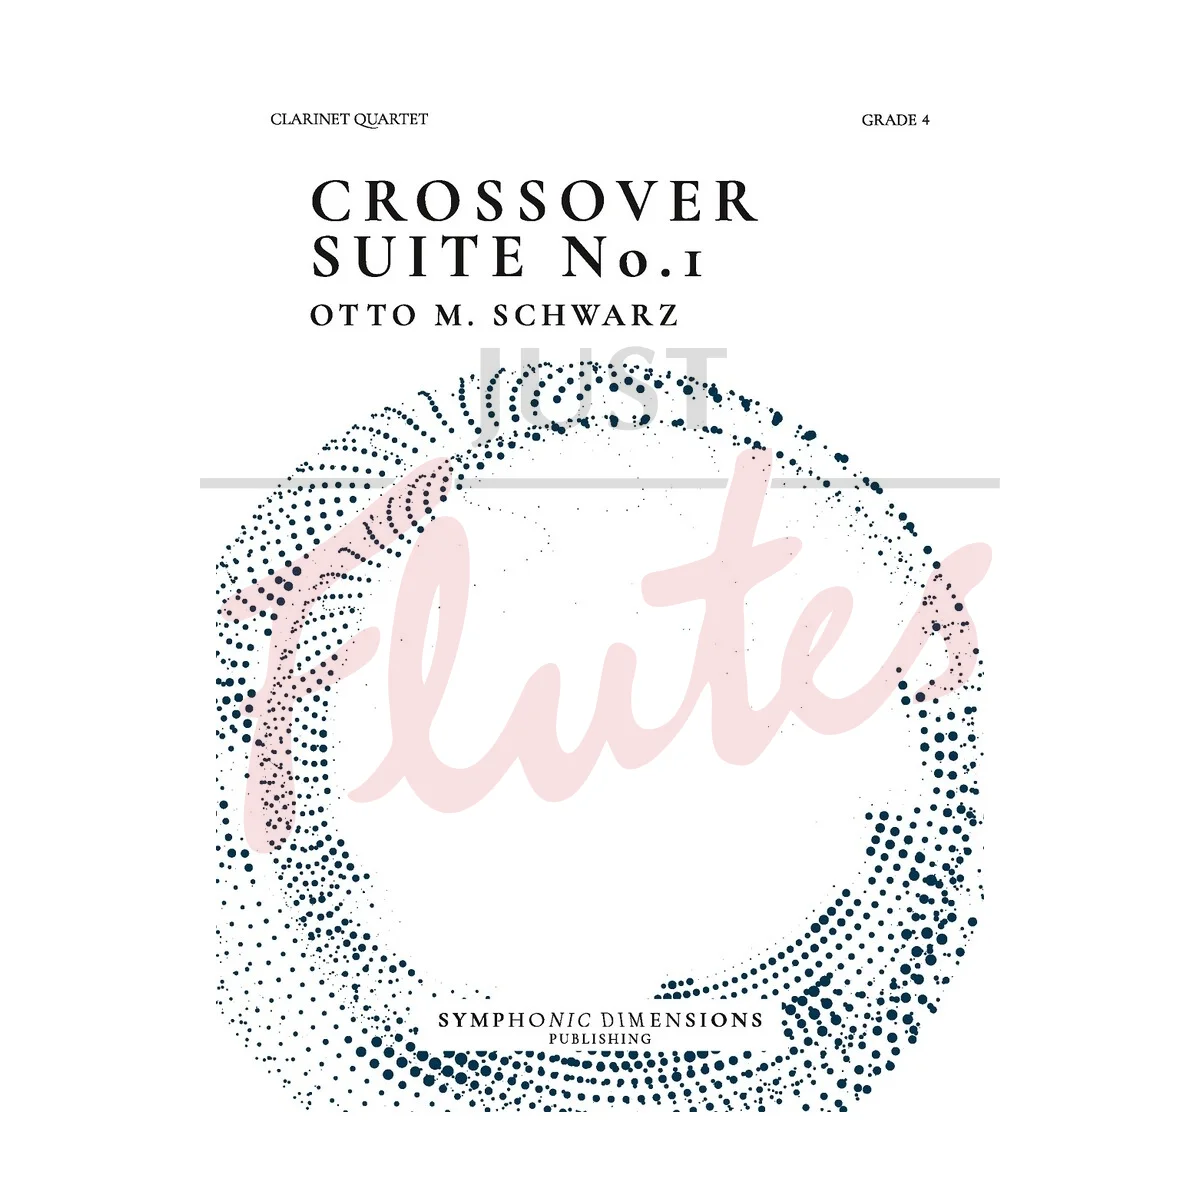 Crossover Suite No. 1 for Clarinet Quartet